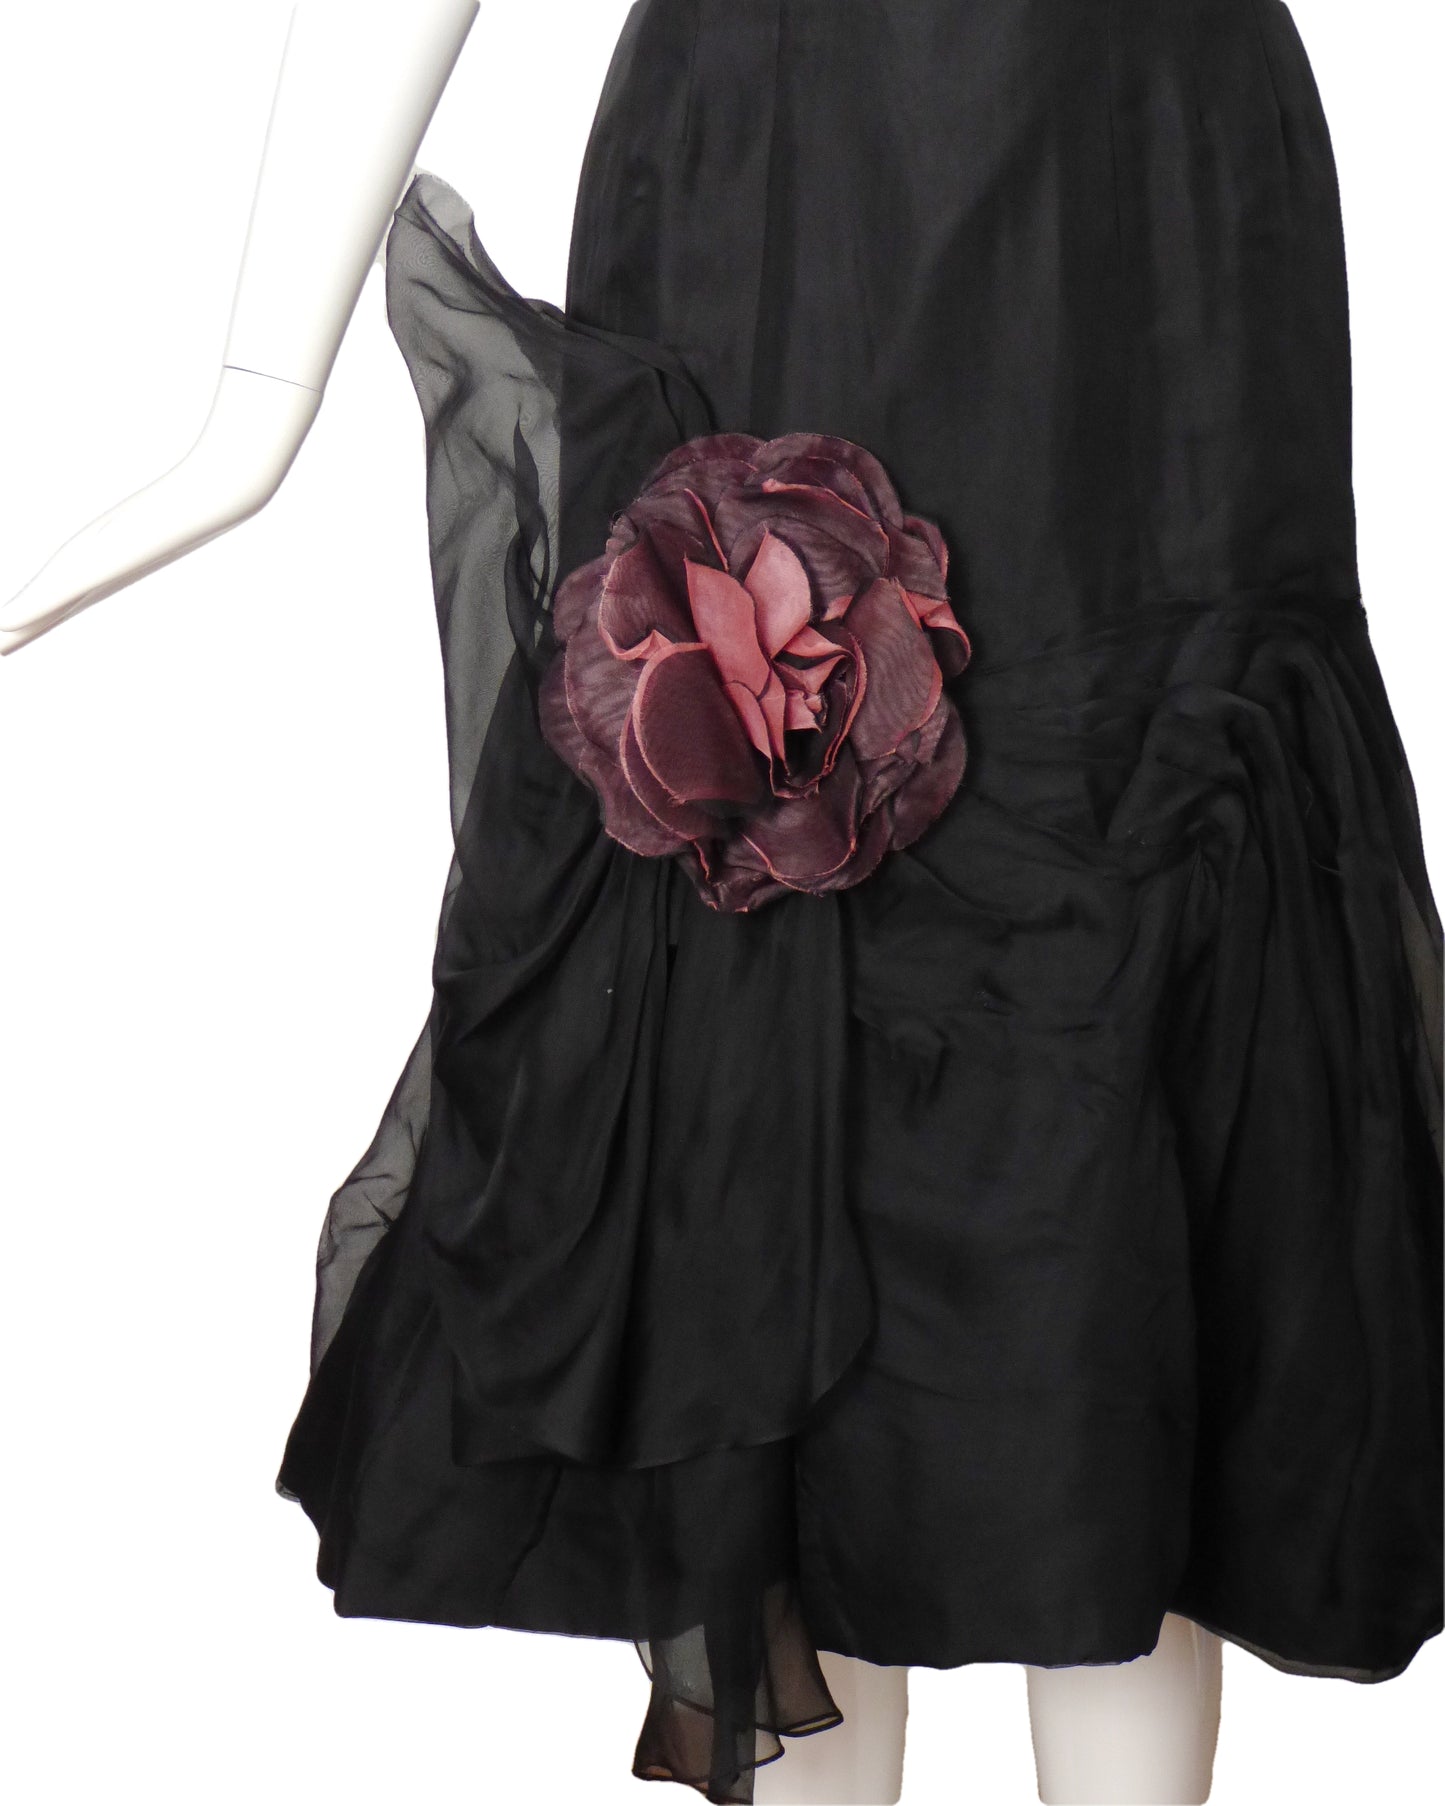 CEIL CHAPMAN-1950s Black Silk Organza Cocktail Dress, Size-2